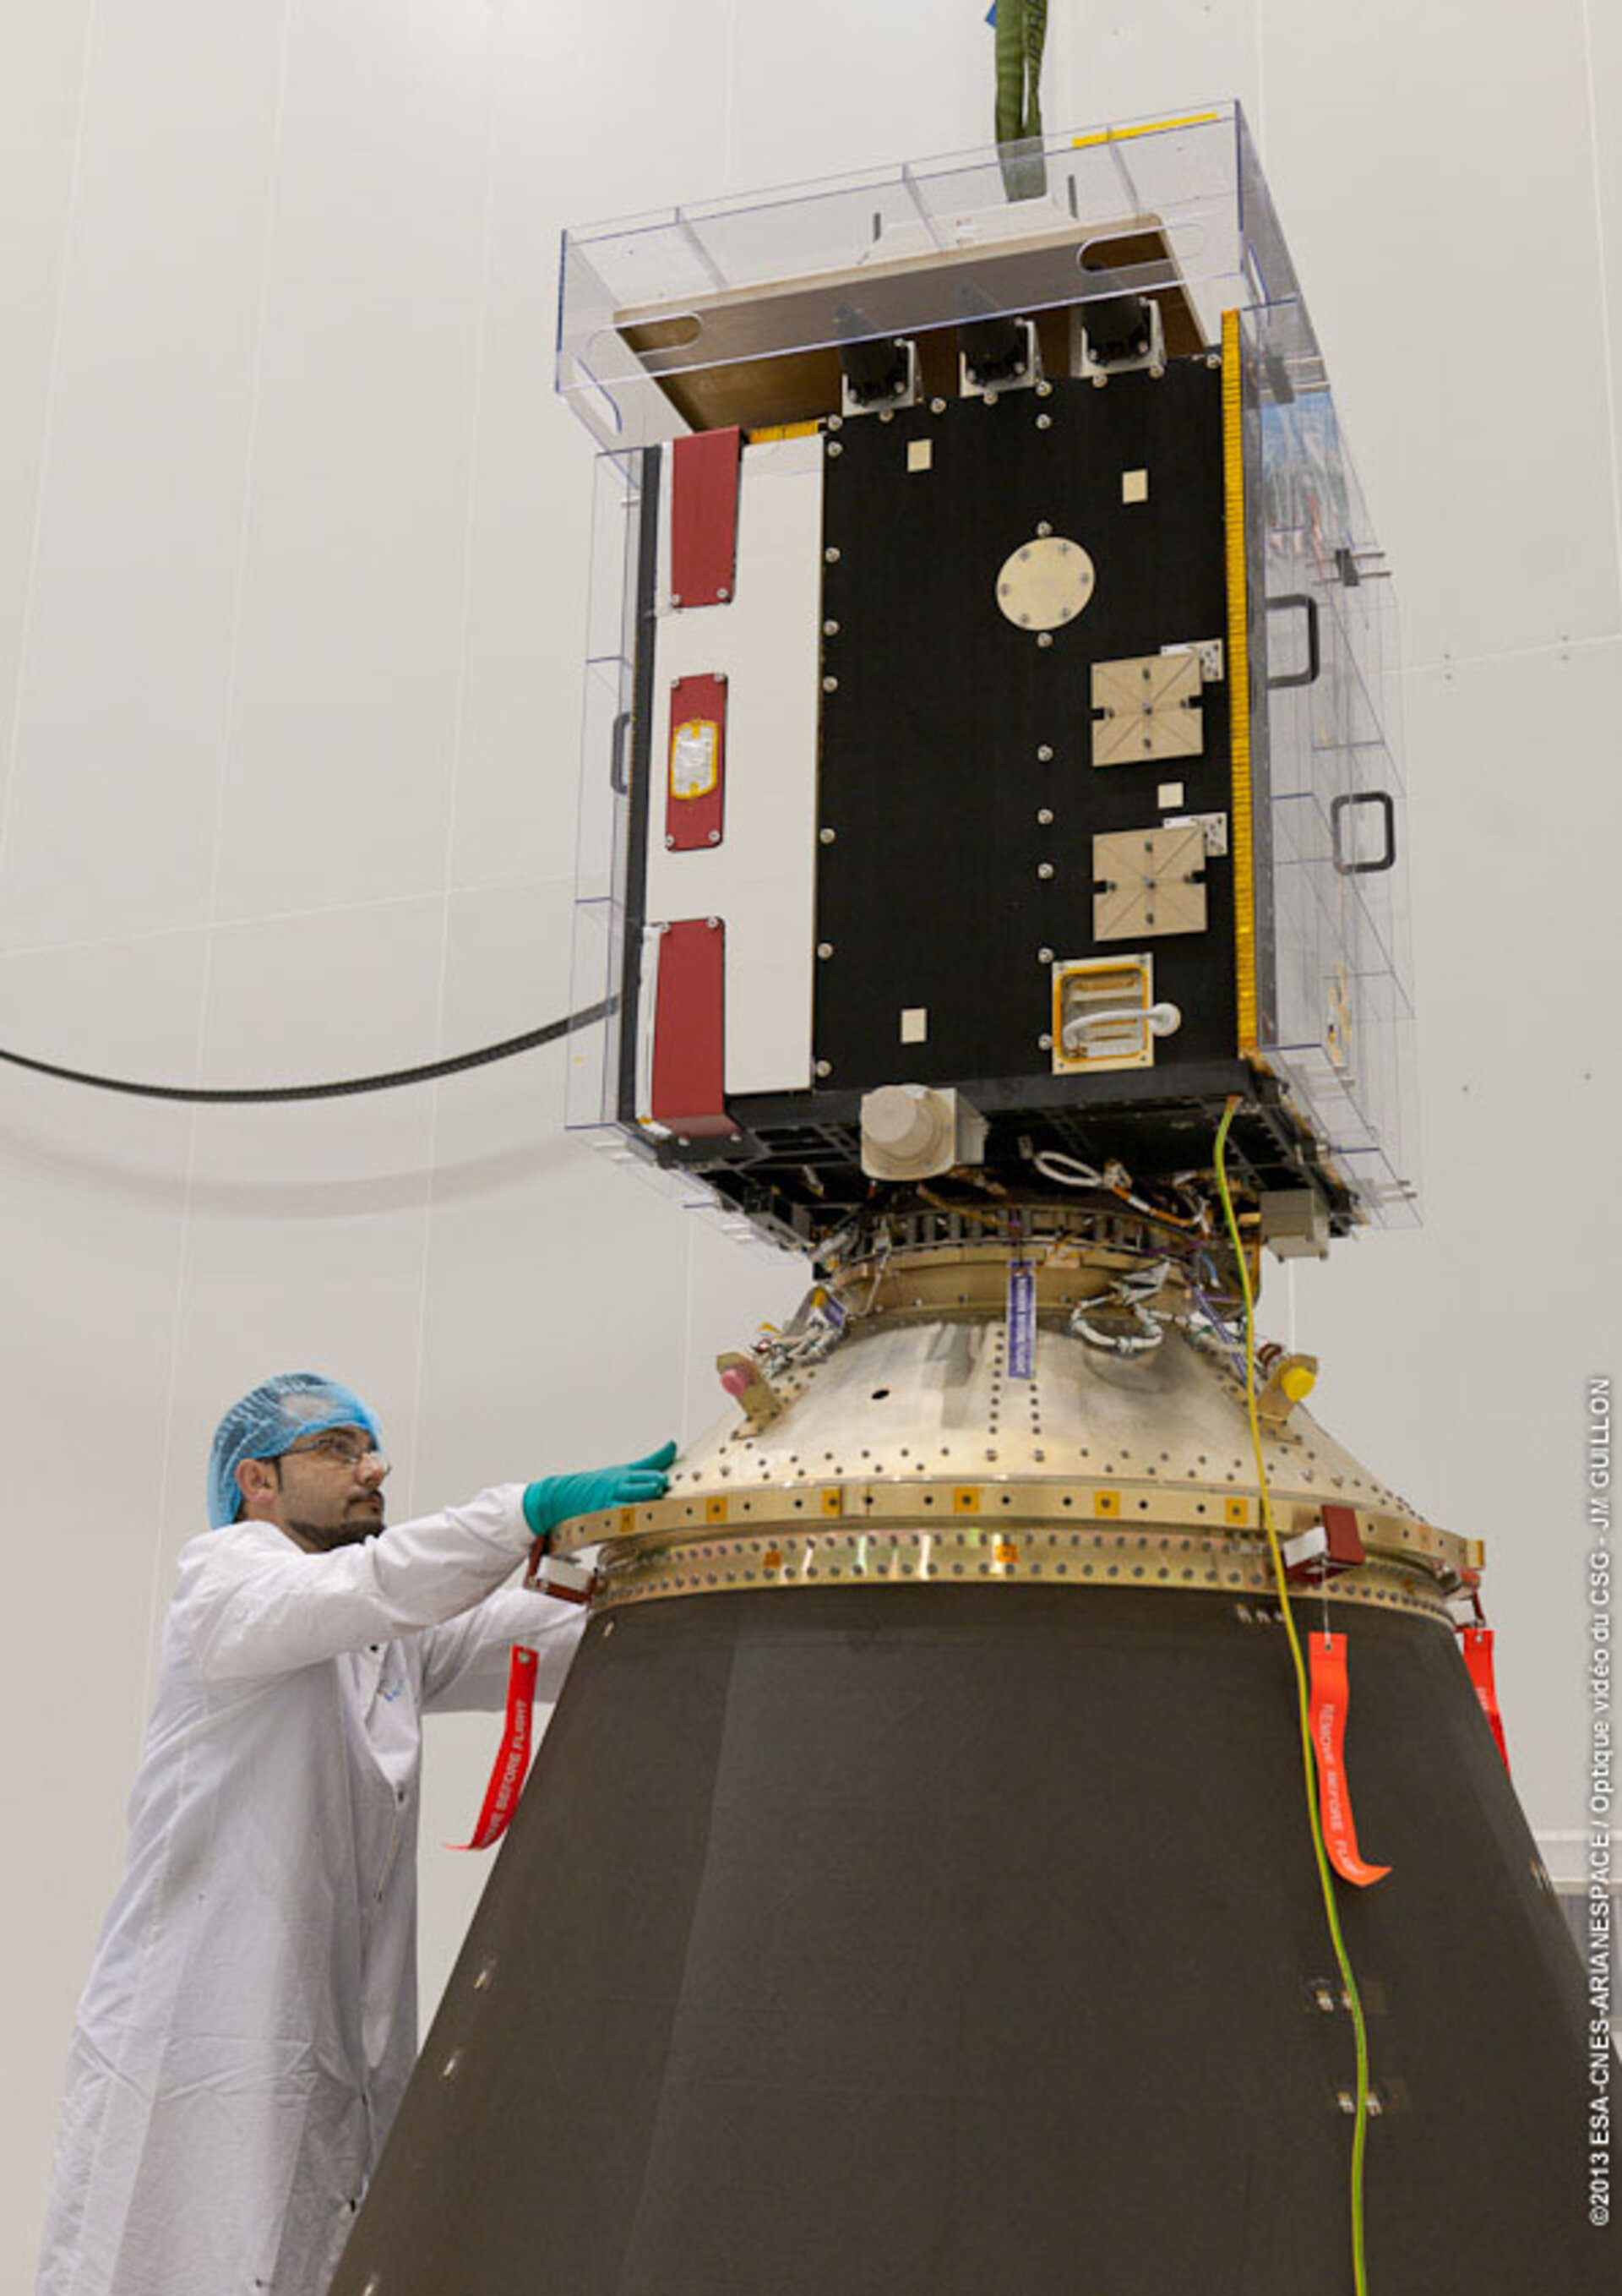 Proba-V launch preparations continue at CSG